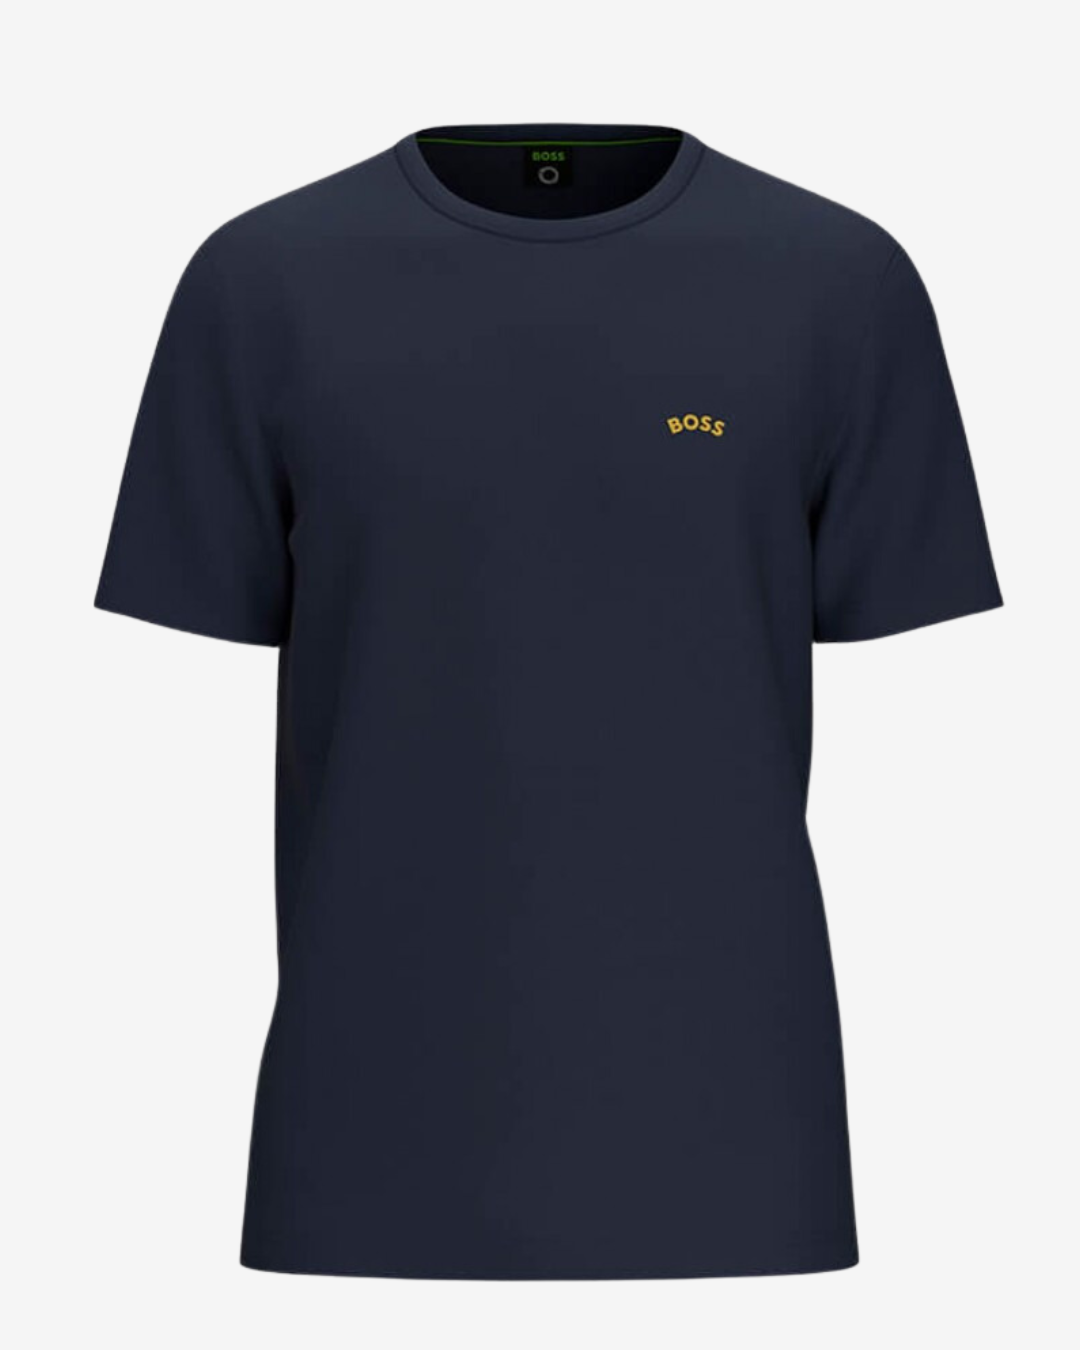 Se Hugo Boss Curved logo t-shirt - Navy / Guld - Str. L - Modish.dk hos Modish.dk